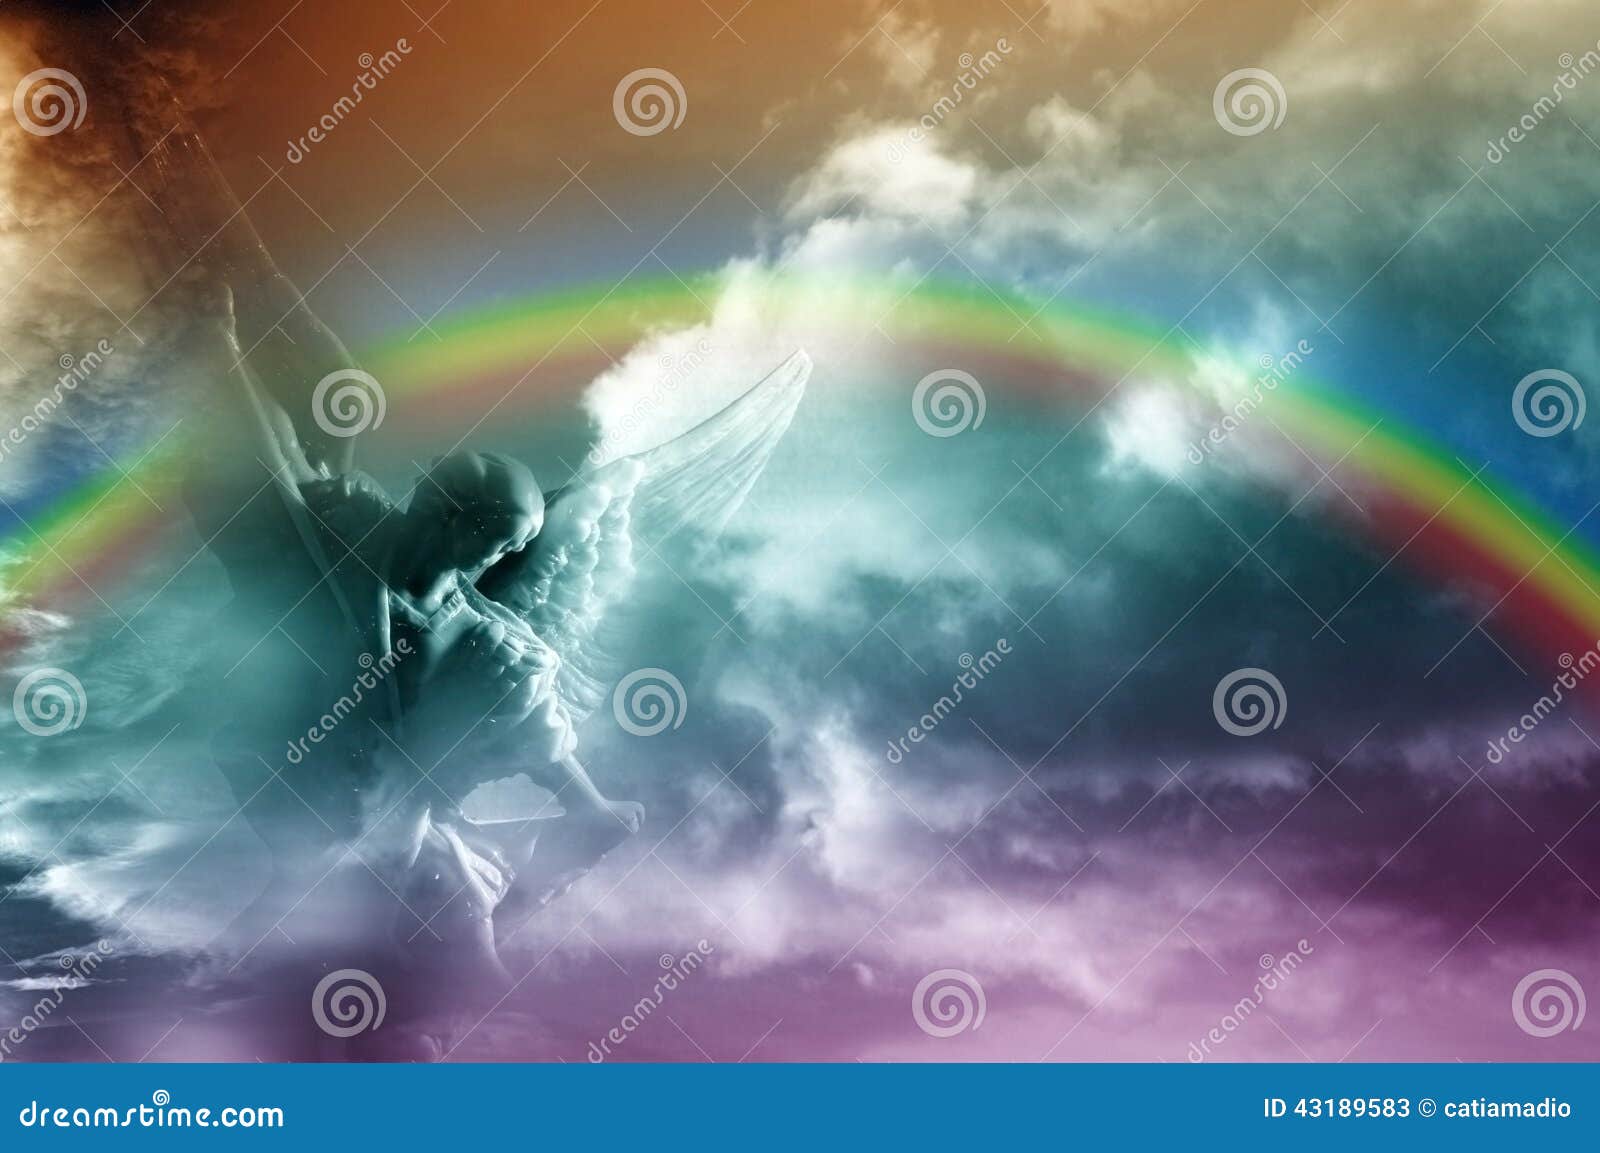 angel and rainbow